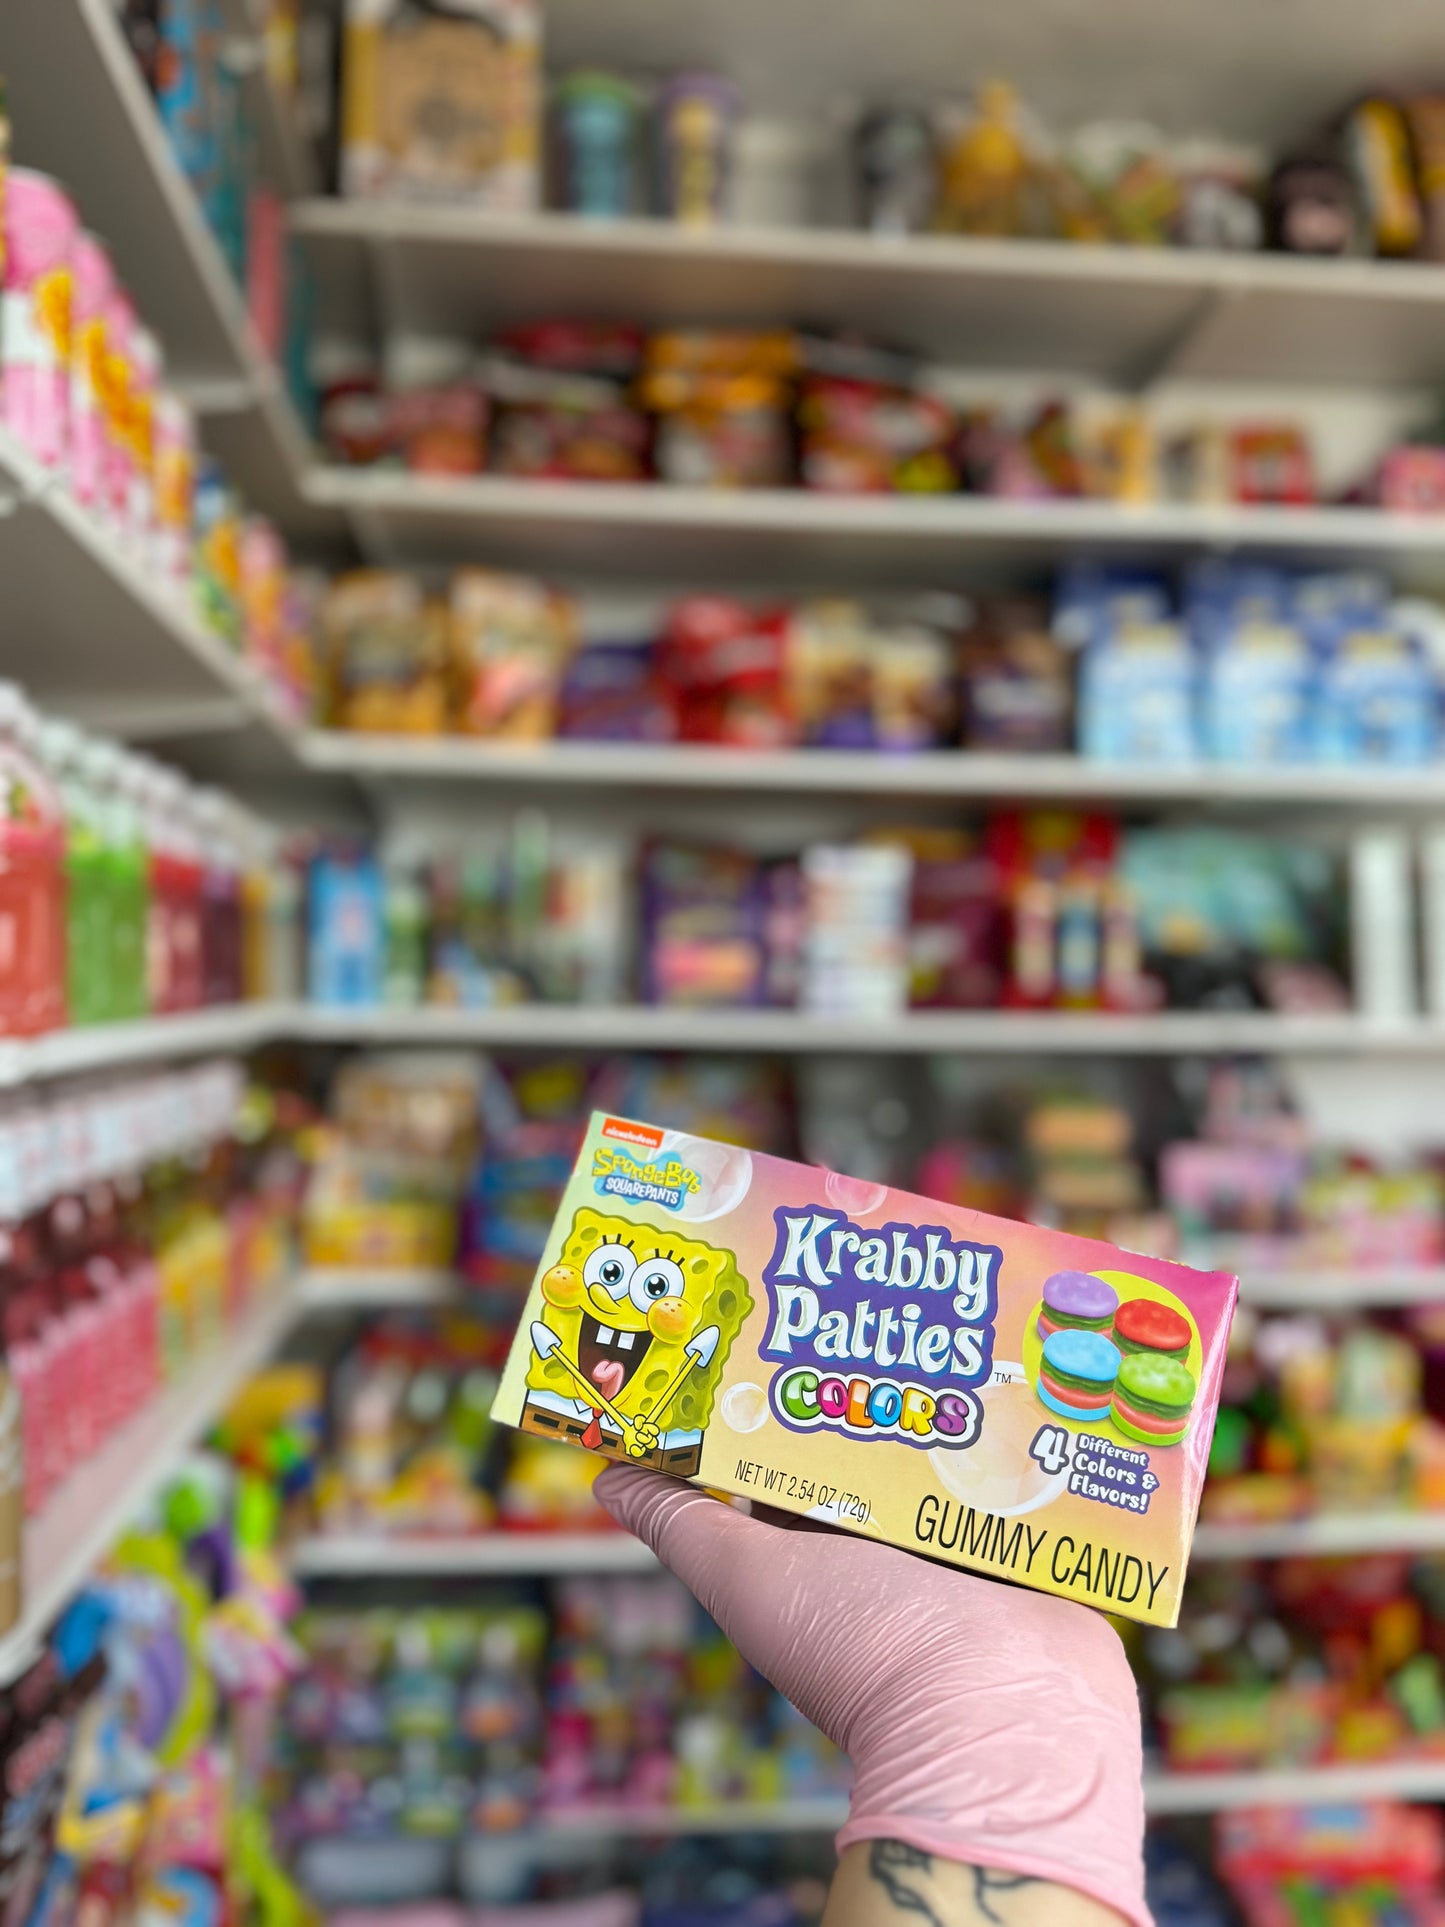 Krabby patties colors candy bonbon gummy - Girlzbox